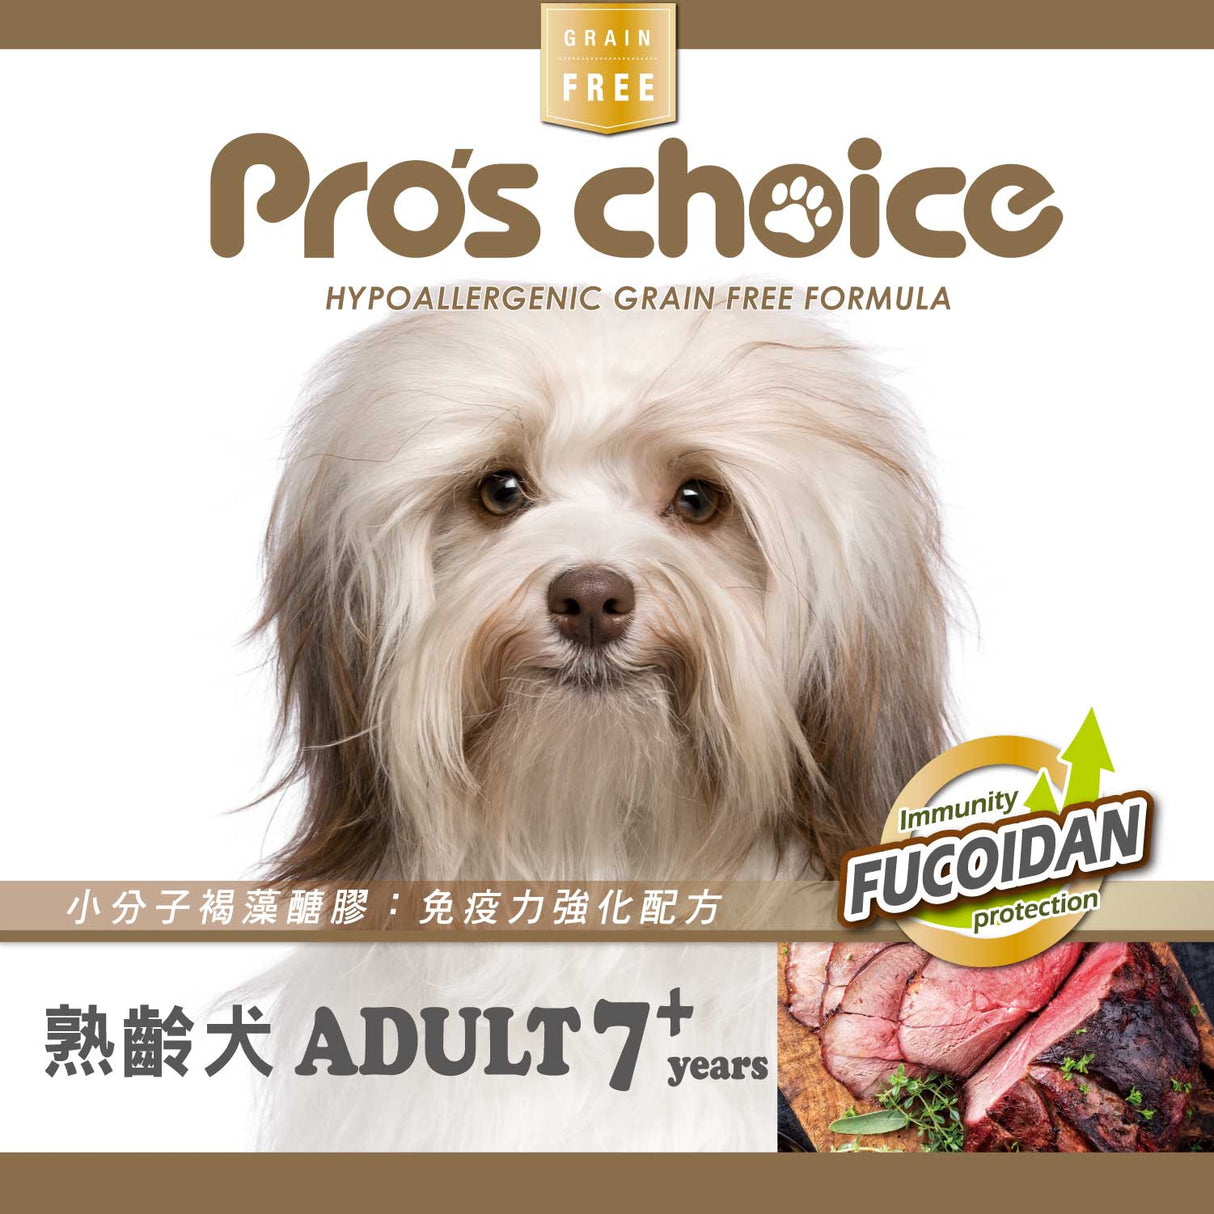 Pro's Choice博士巧思 無穀犬食 羊肉地瓜+褐藻 / 鮭魚馬鈴薯+褐藻 / 7⁺熟齡專屬保健配方+褐藻 1kg / 3kg /8kg